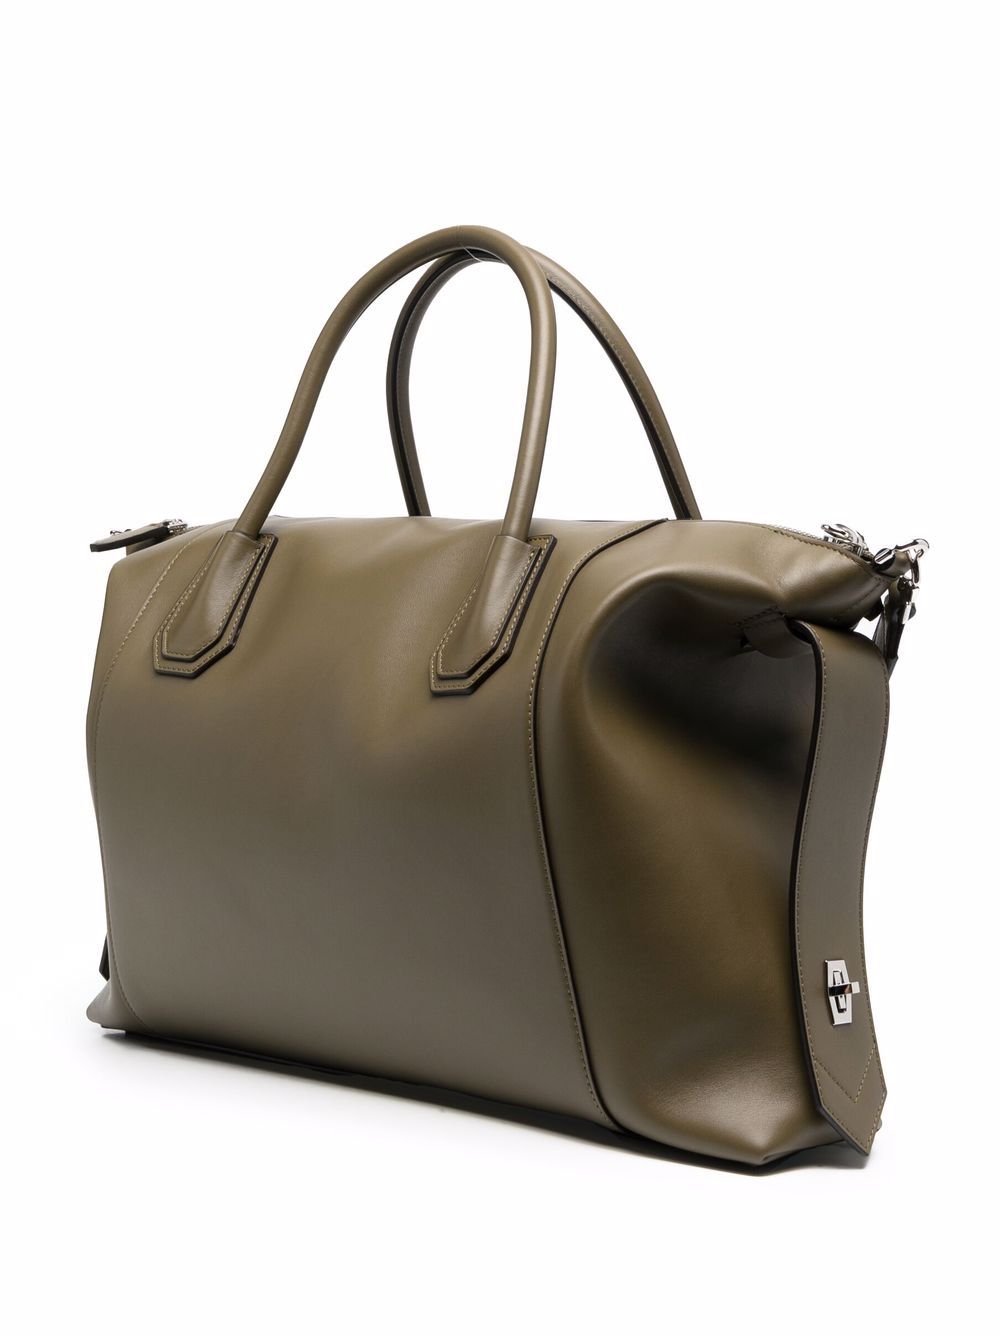 фото Givenchy сумка-тоут antigona среднего размера